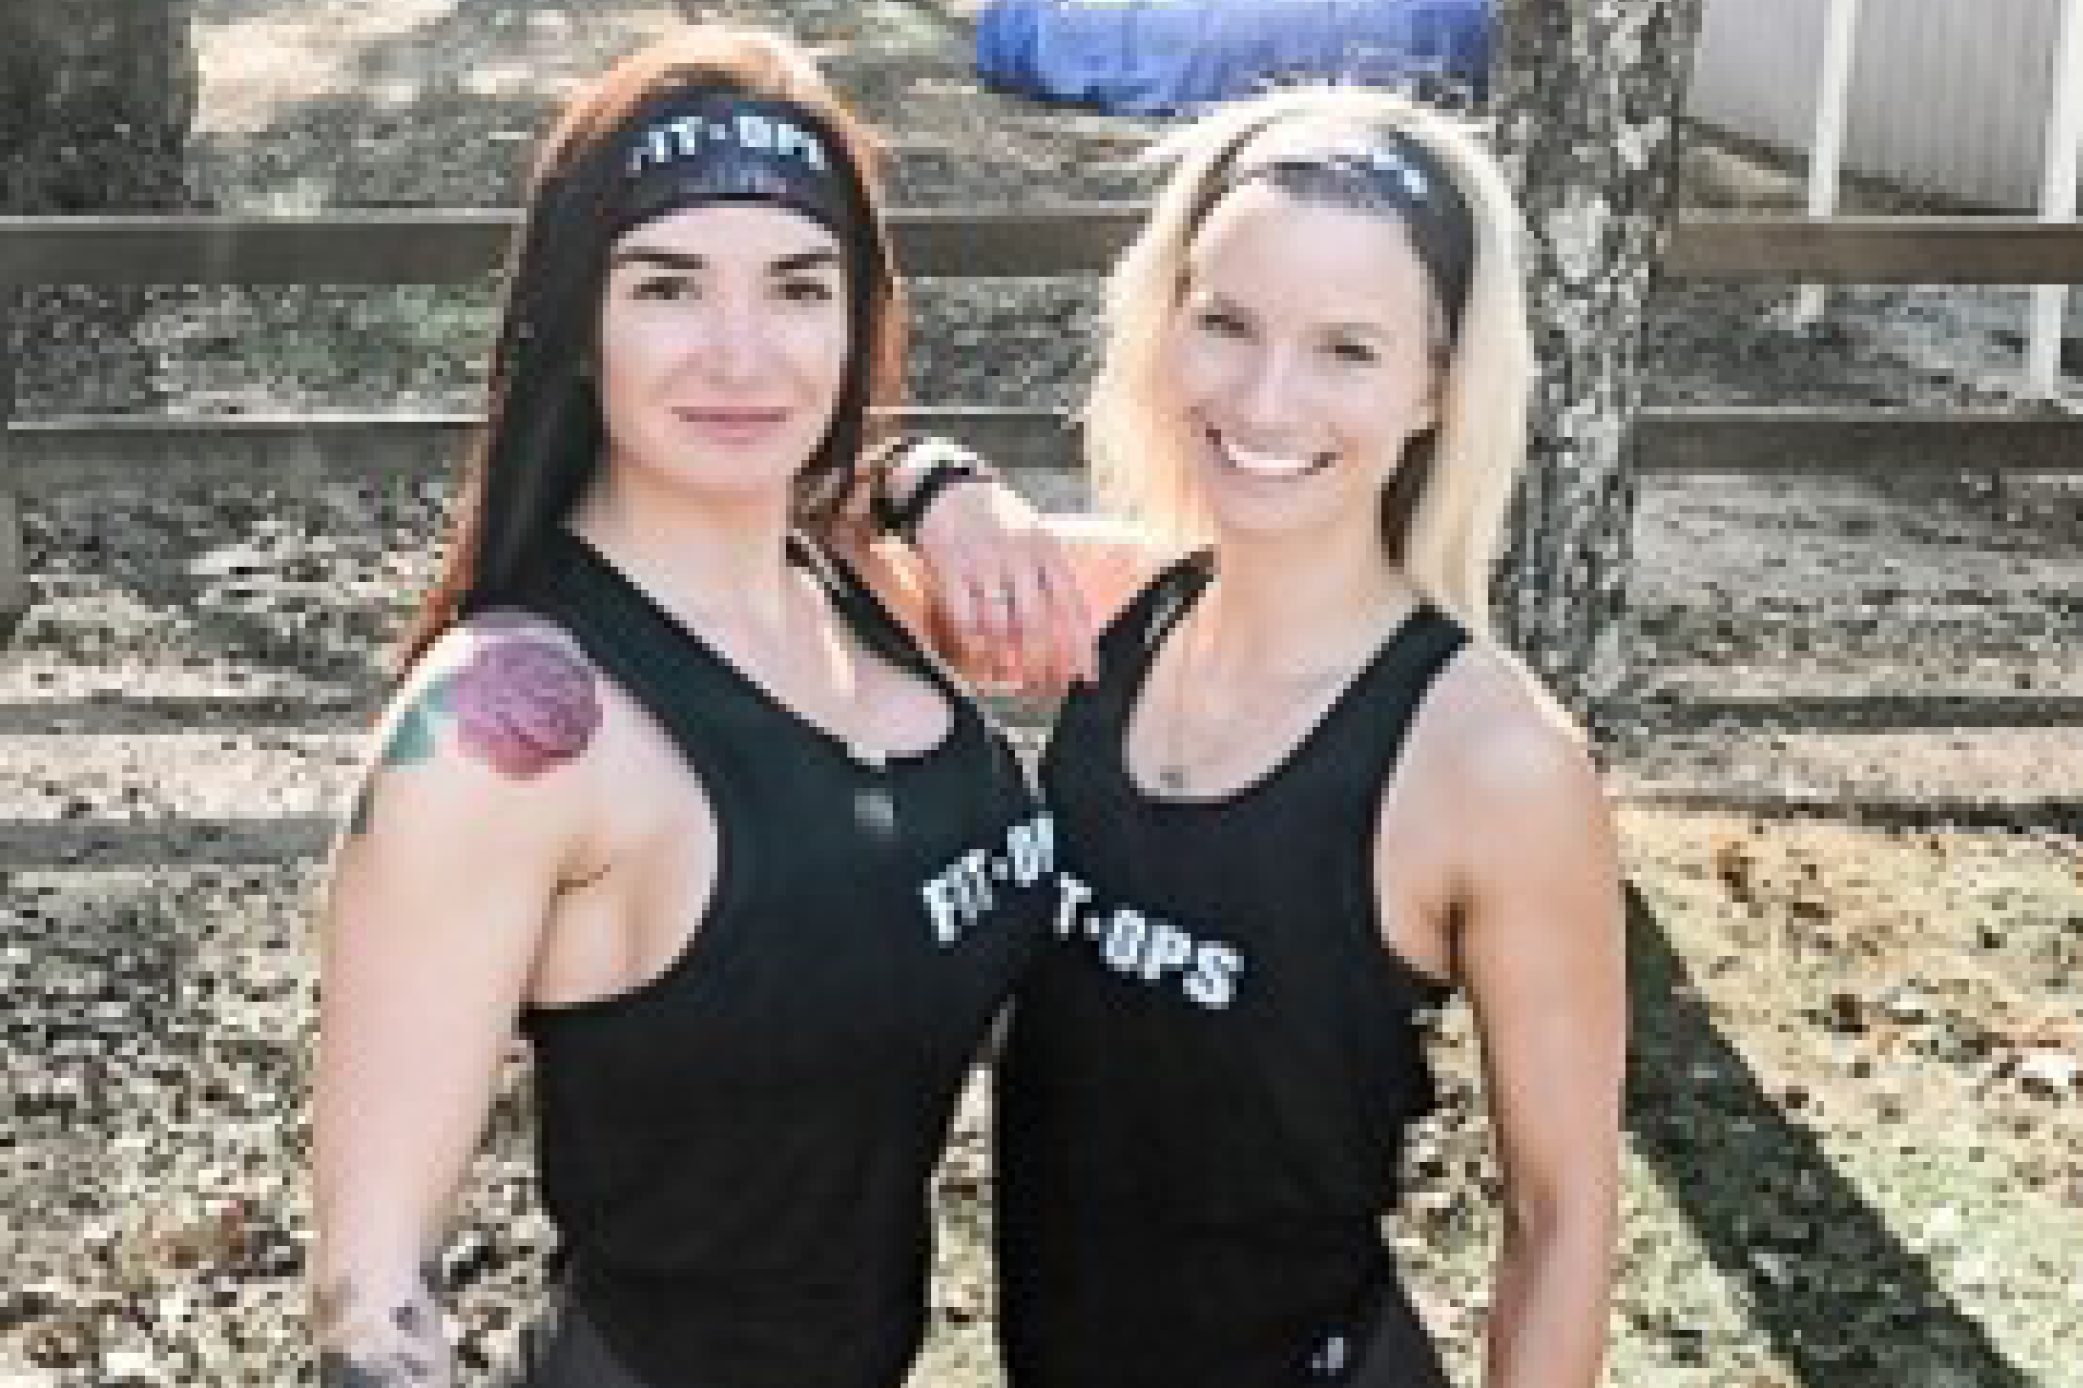 Image of two women wearing matching leggings and tank tops